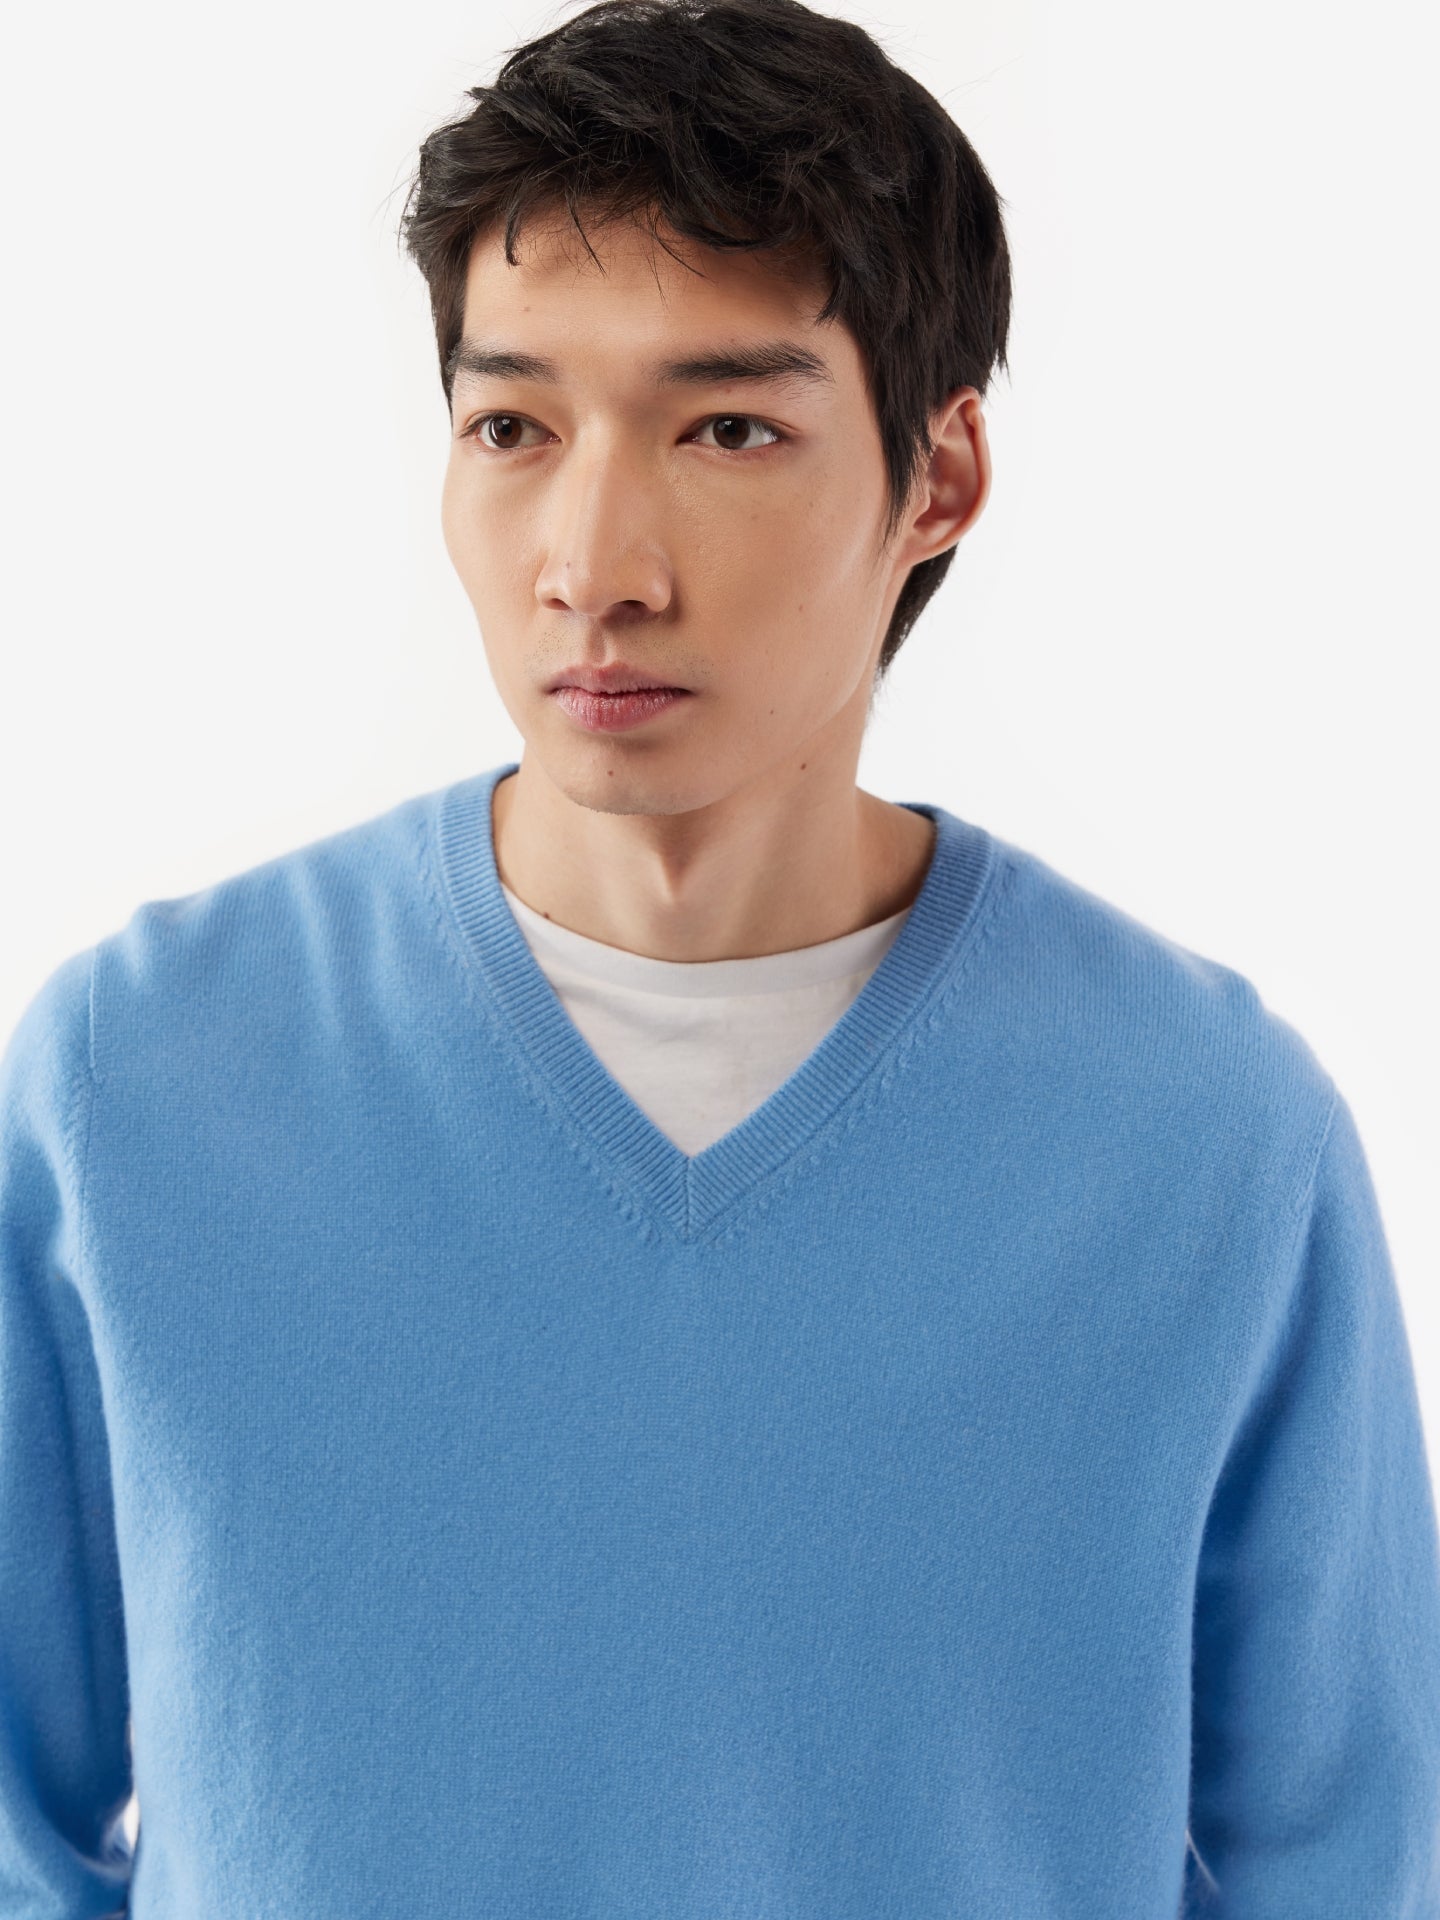 Men's Cashmere Basic V-Neck Sweater Azure Blue - Gobi Cashmere